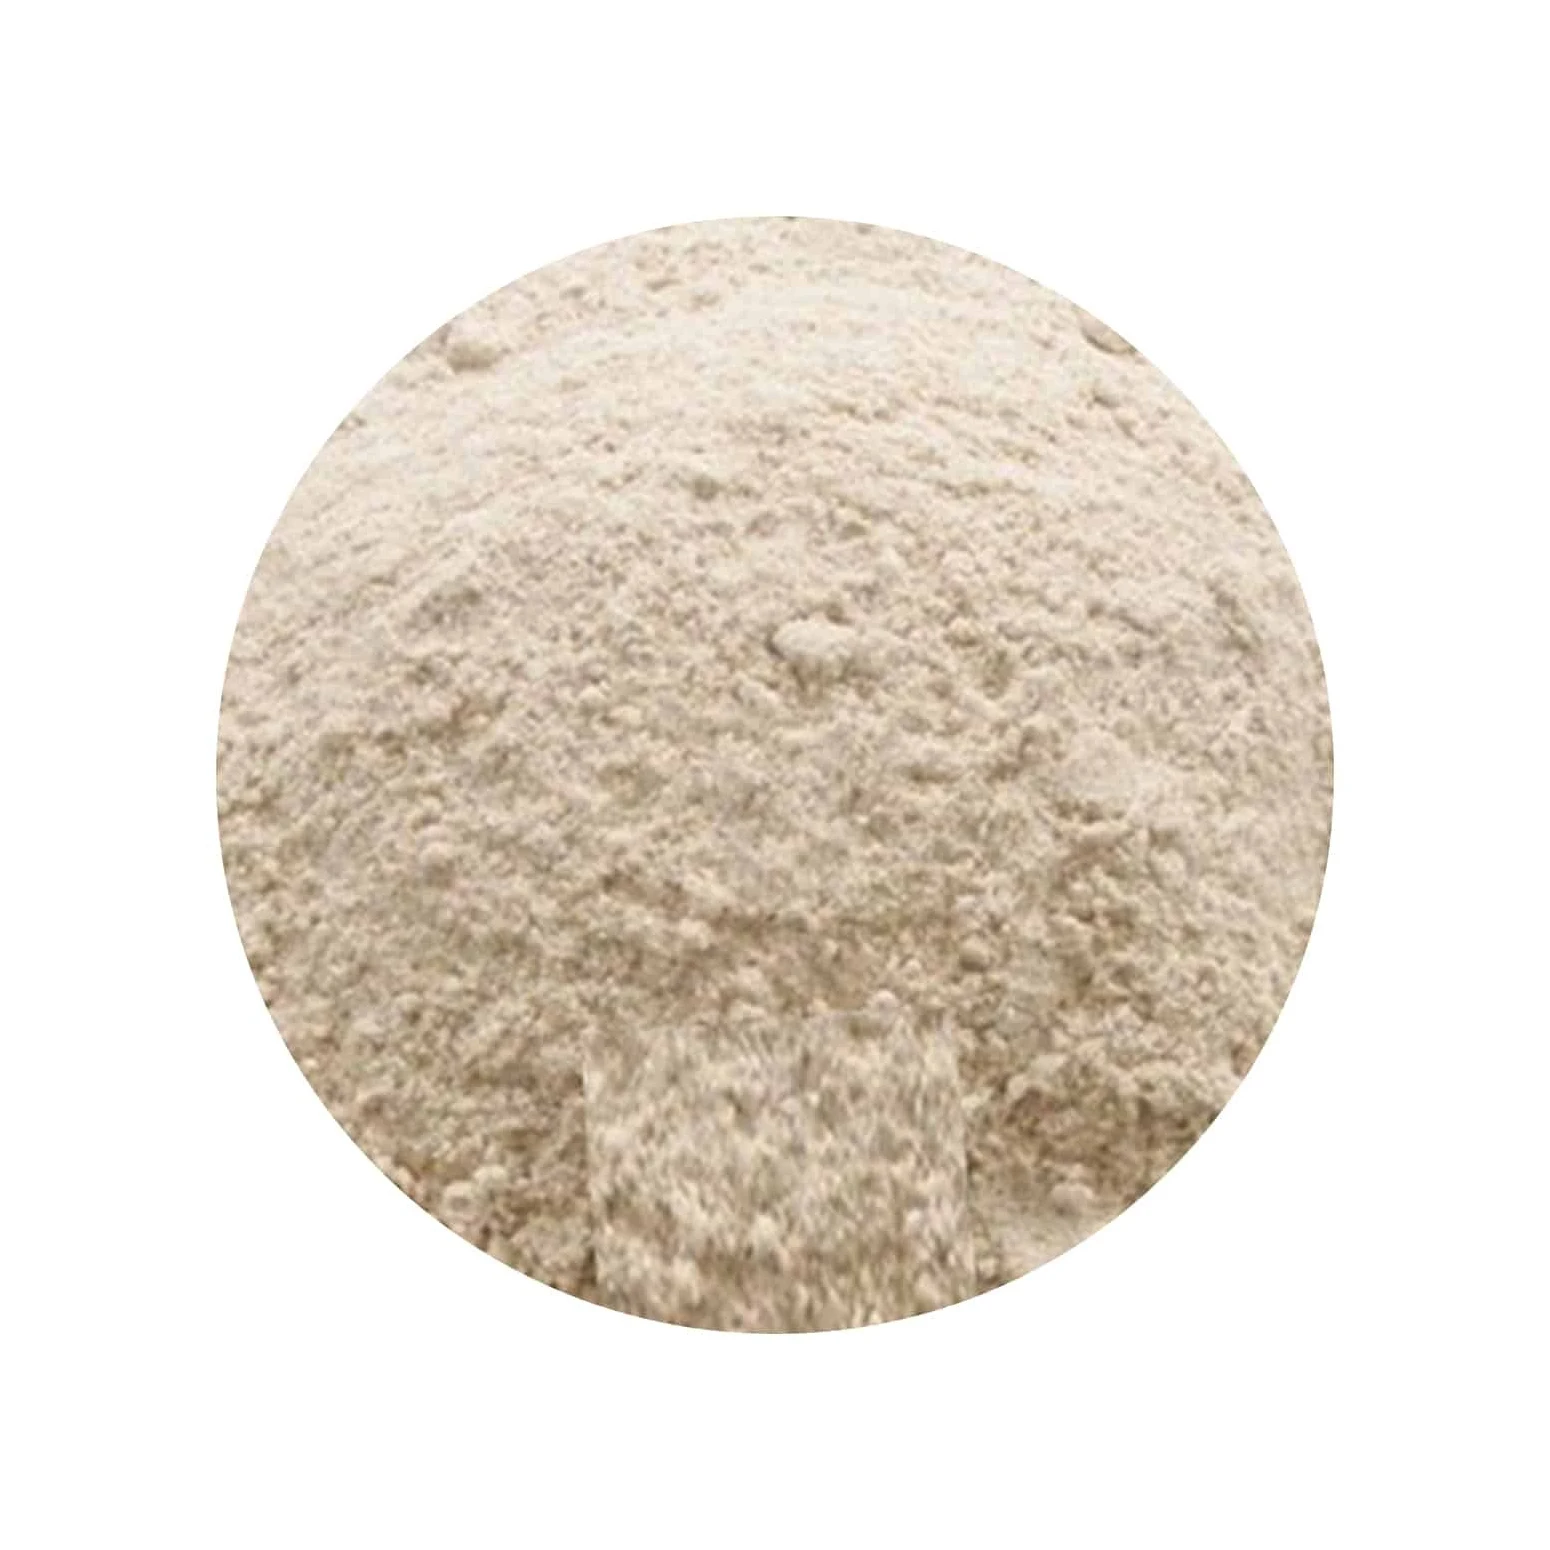 Best quality millet flour Made with superior millet blend Household bajra flour 1kg Millet flour